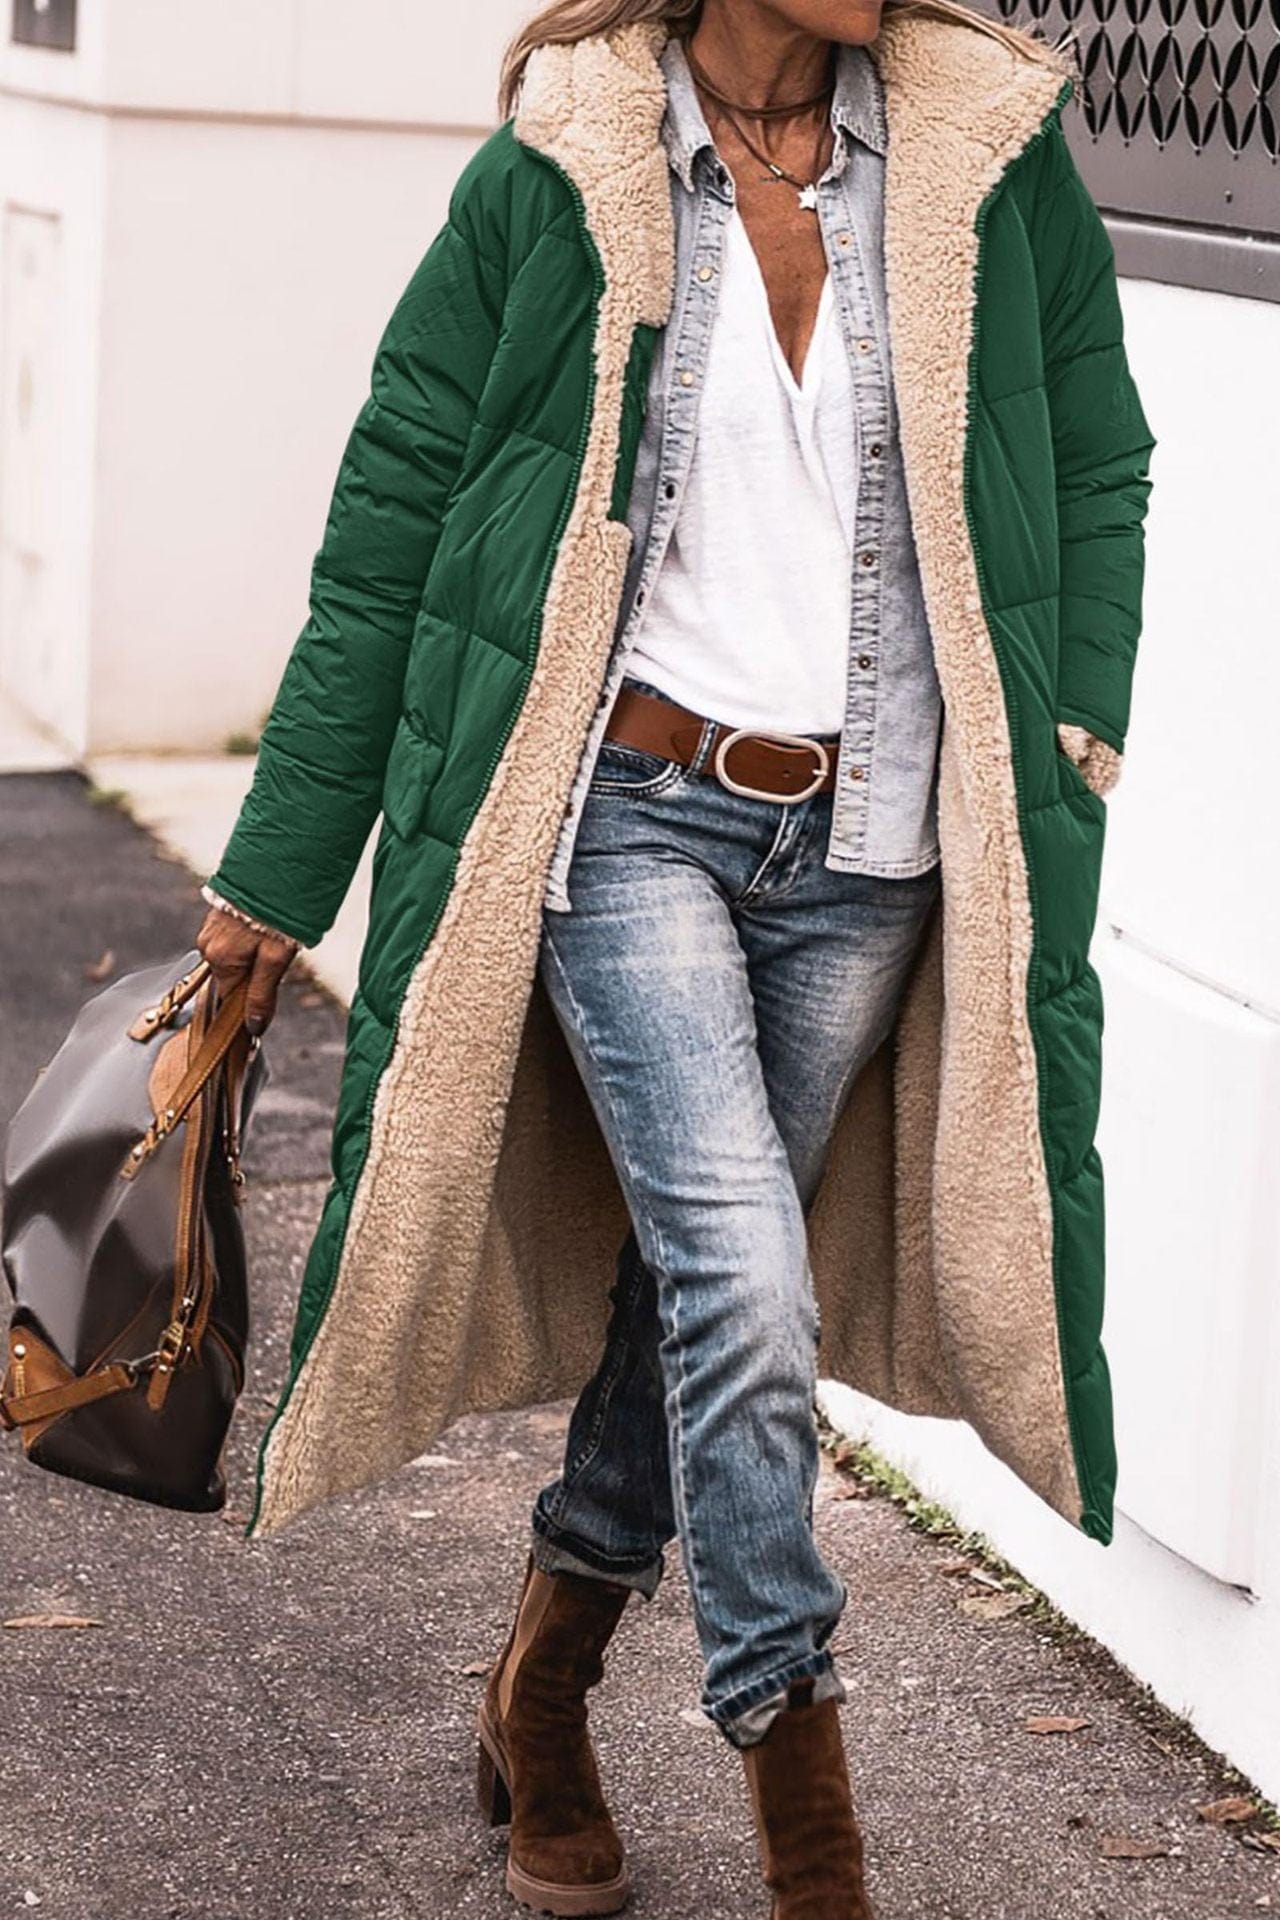 LOVEMI  WDown jacket Green / S Lovemi -  Women's Solid Color Hooded Cotton Jacket Long-sleeved Coat